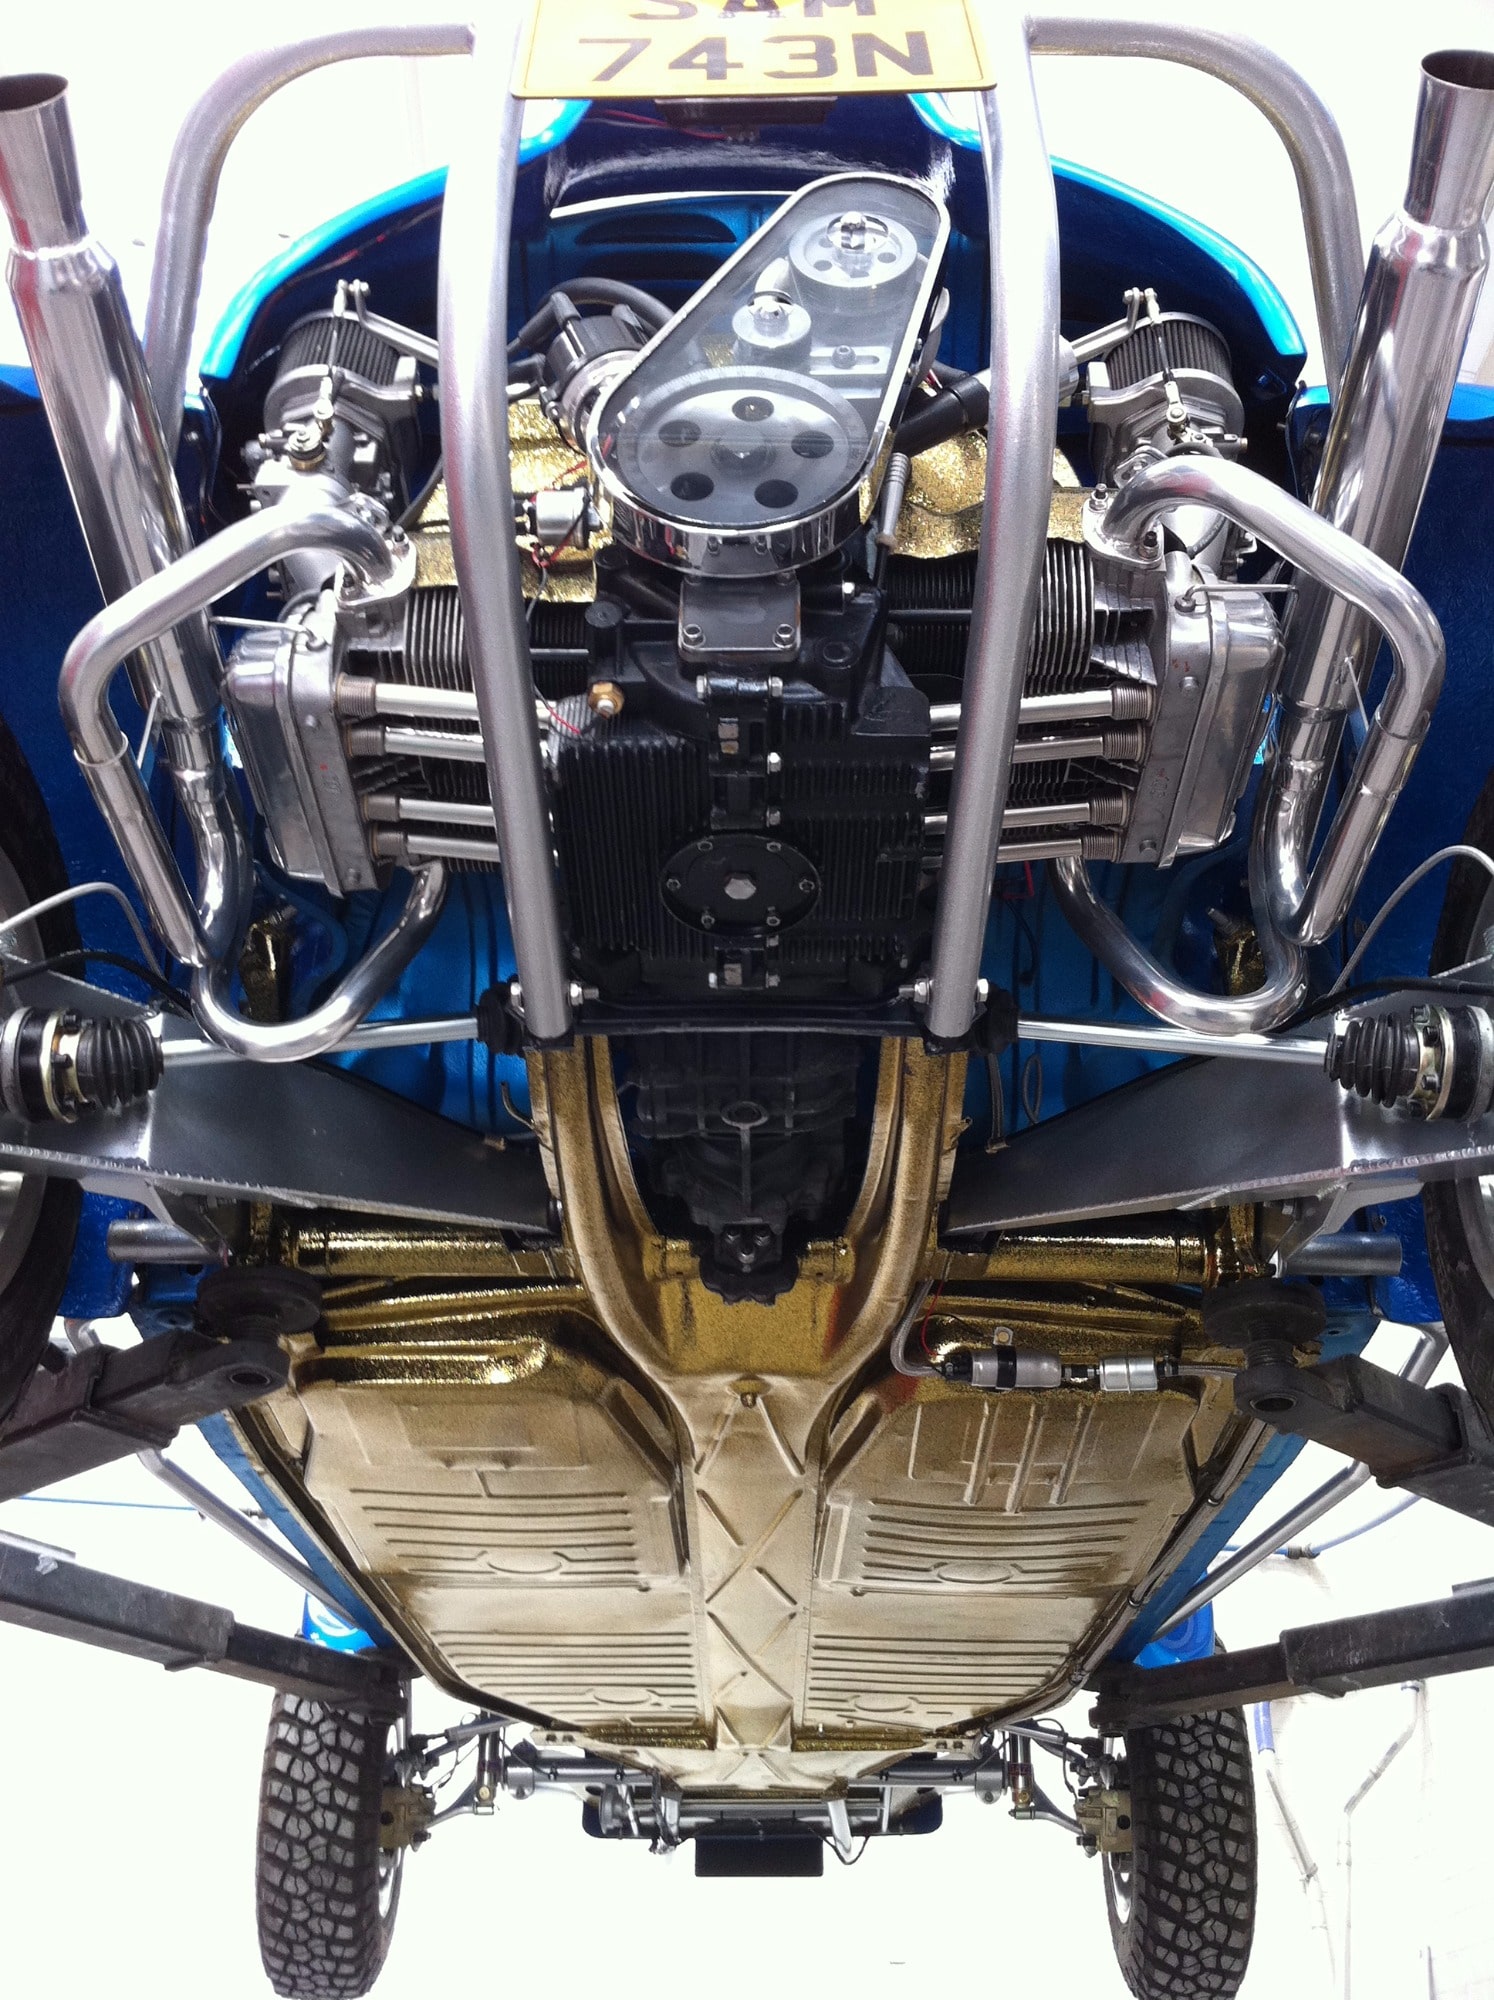 Beetle engine - blue - under view